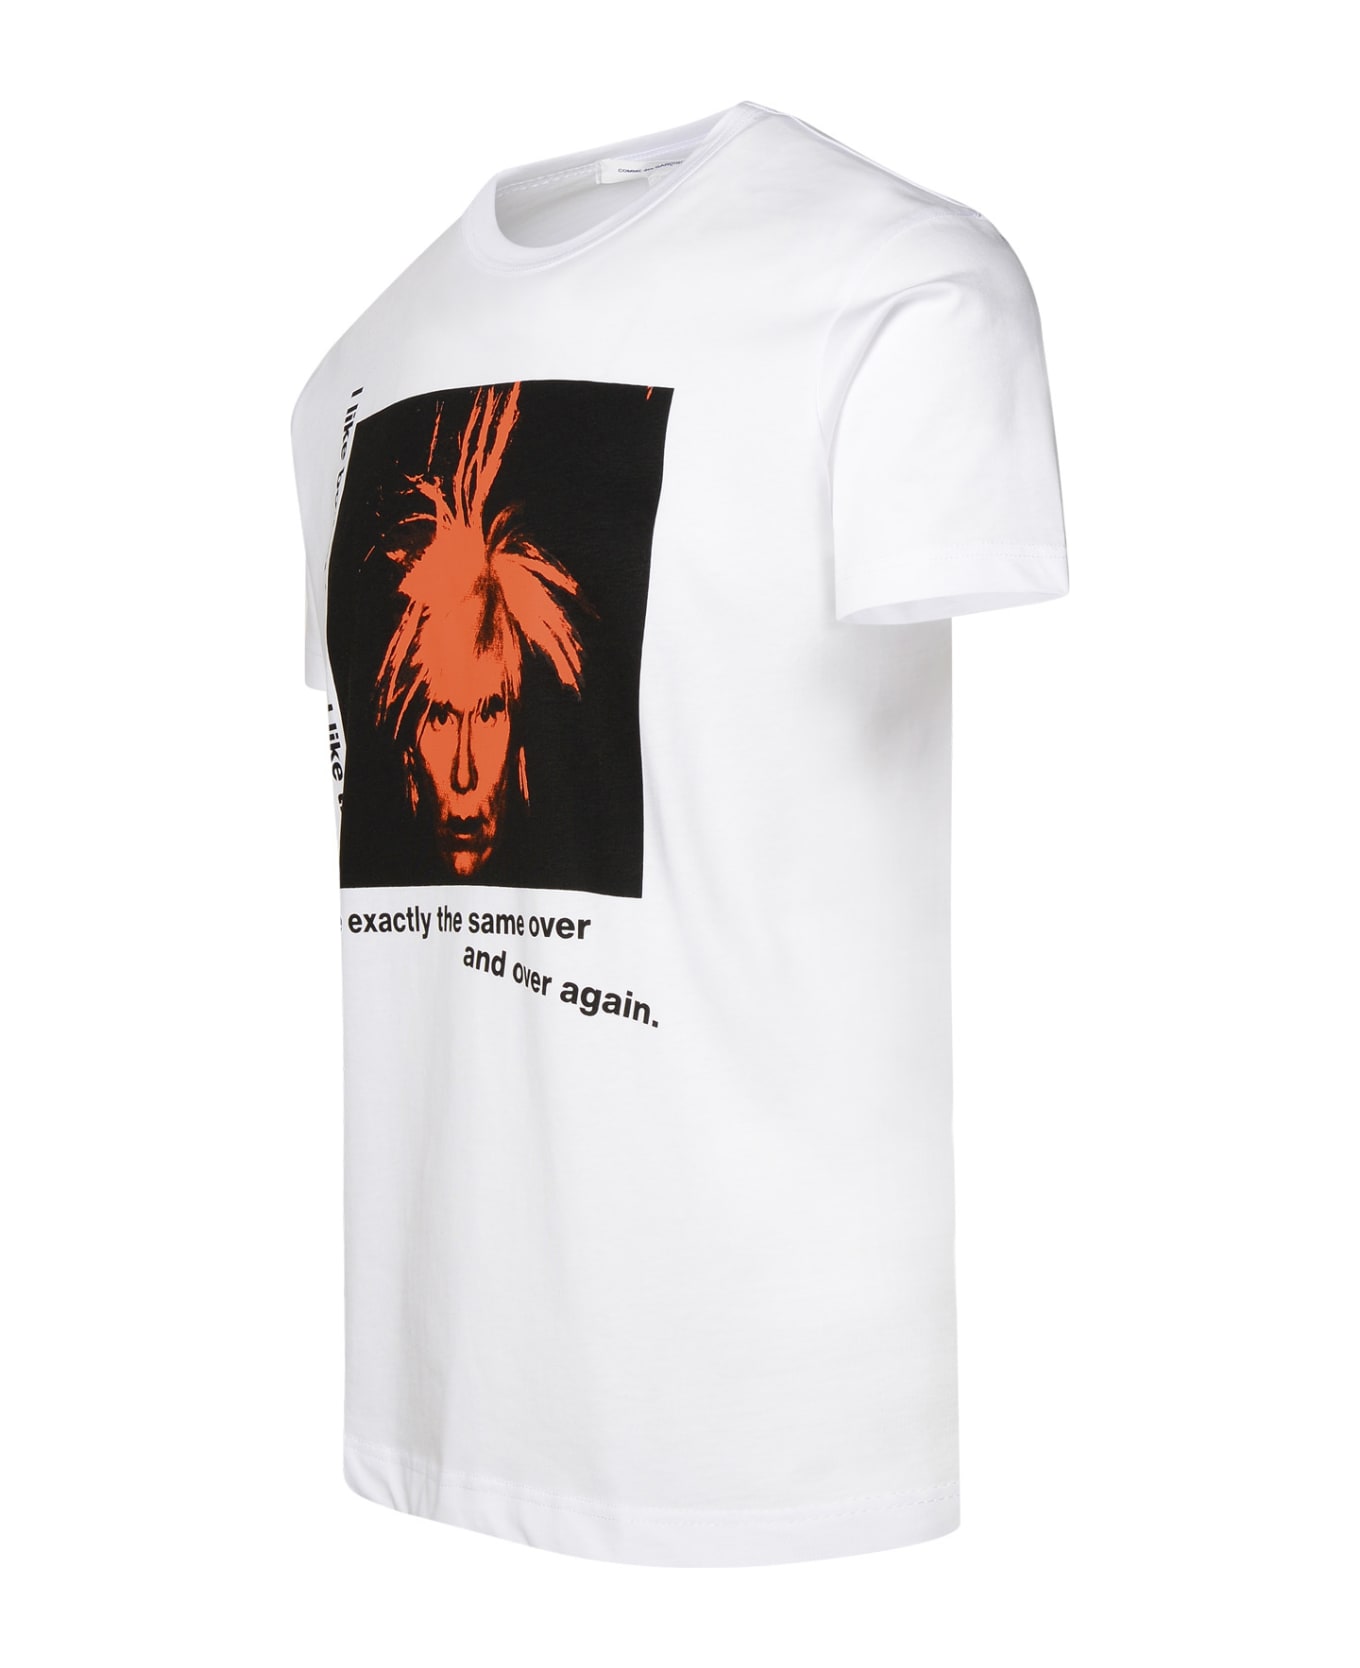 Comme des Garçons Shirt 'andy Warhol' White Cotton T-shirt - White